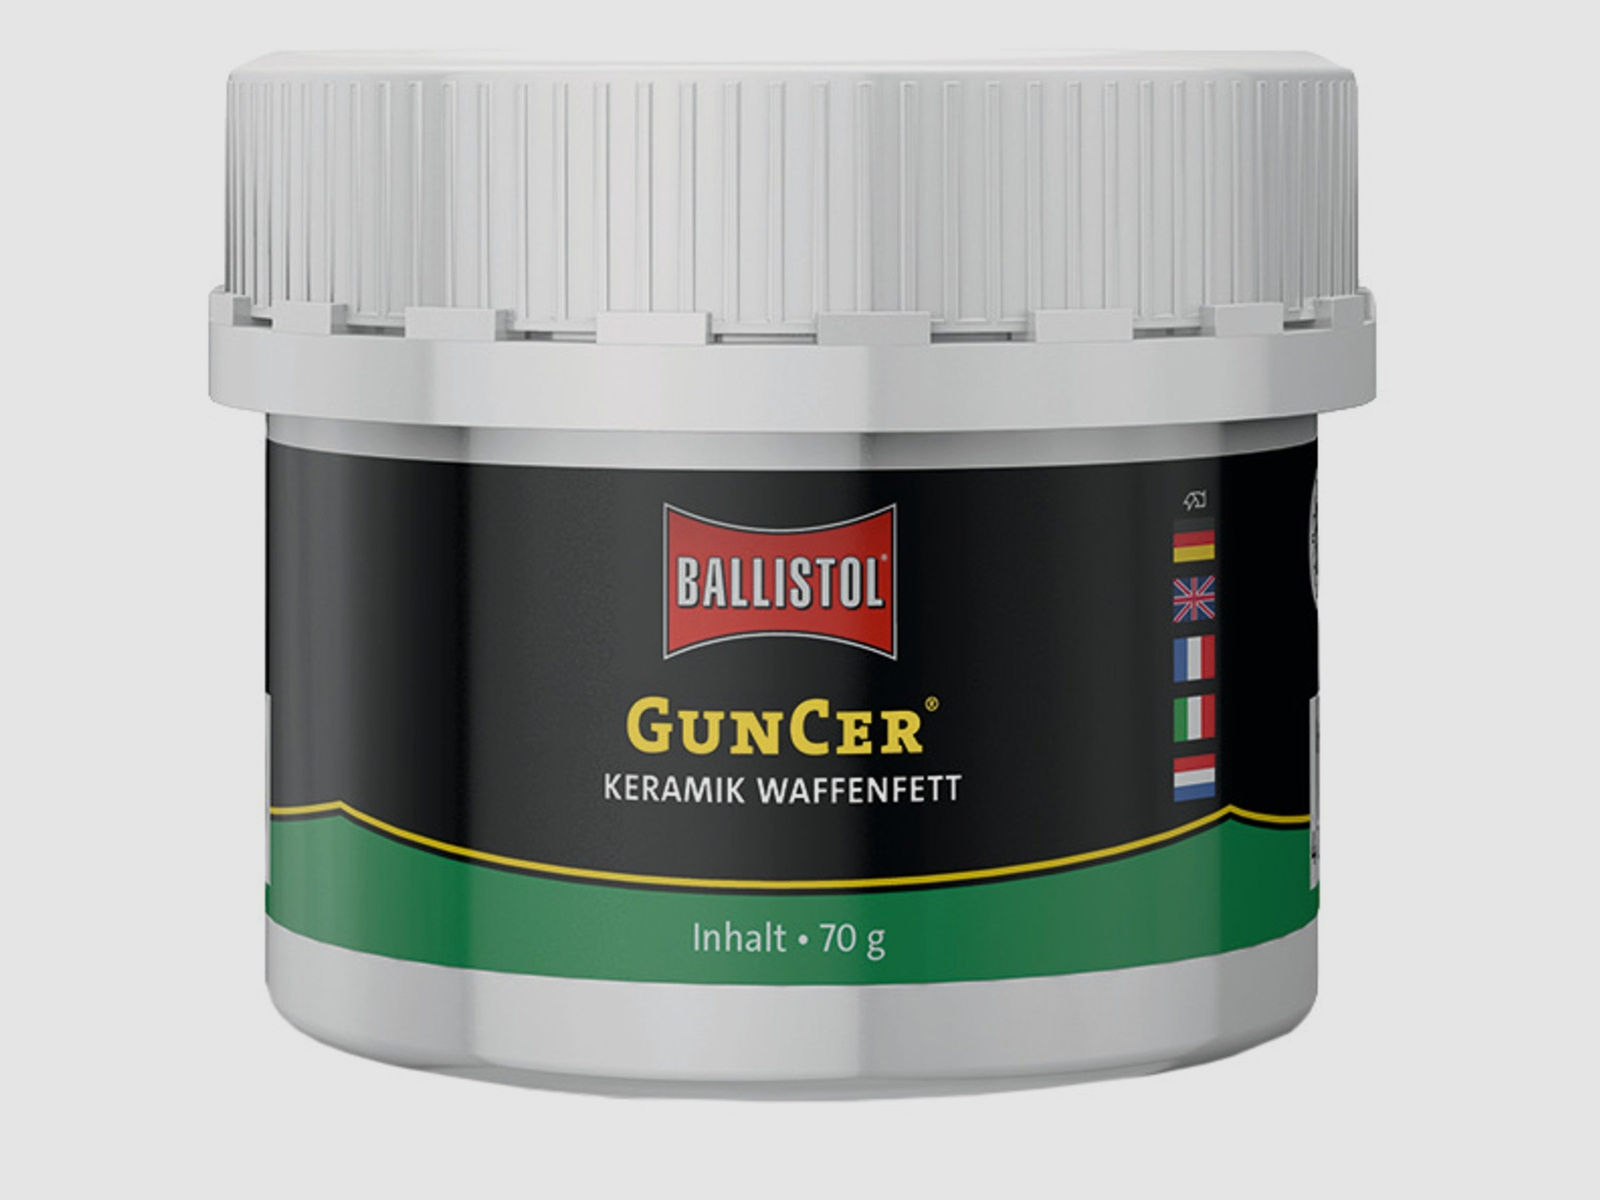 Ballistol GunCer Keramik-Waffenfett